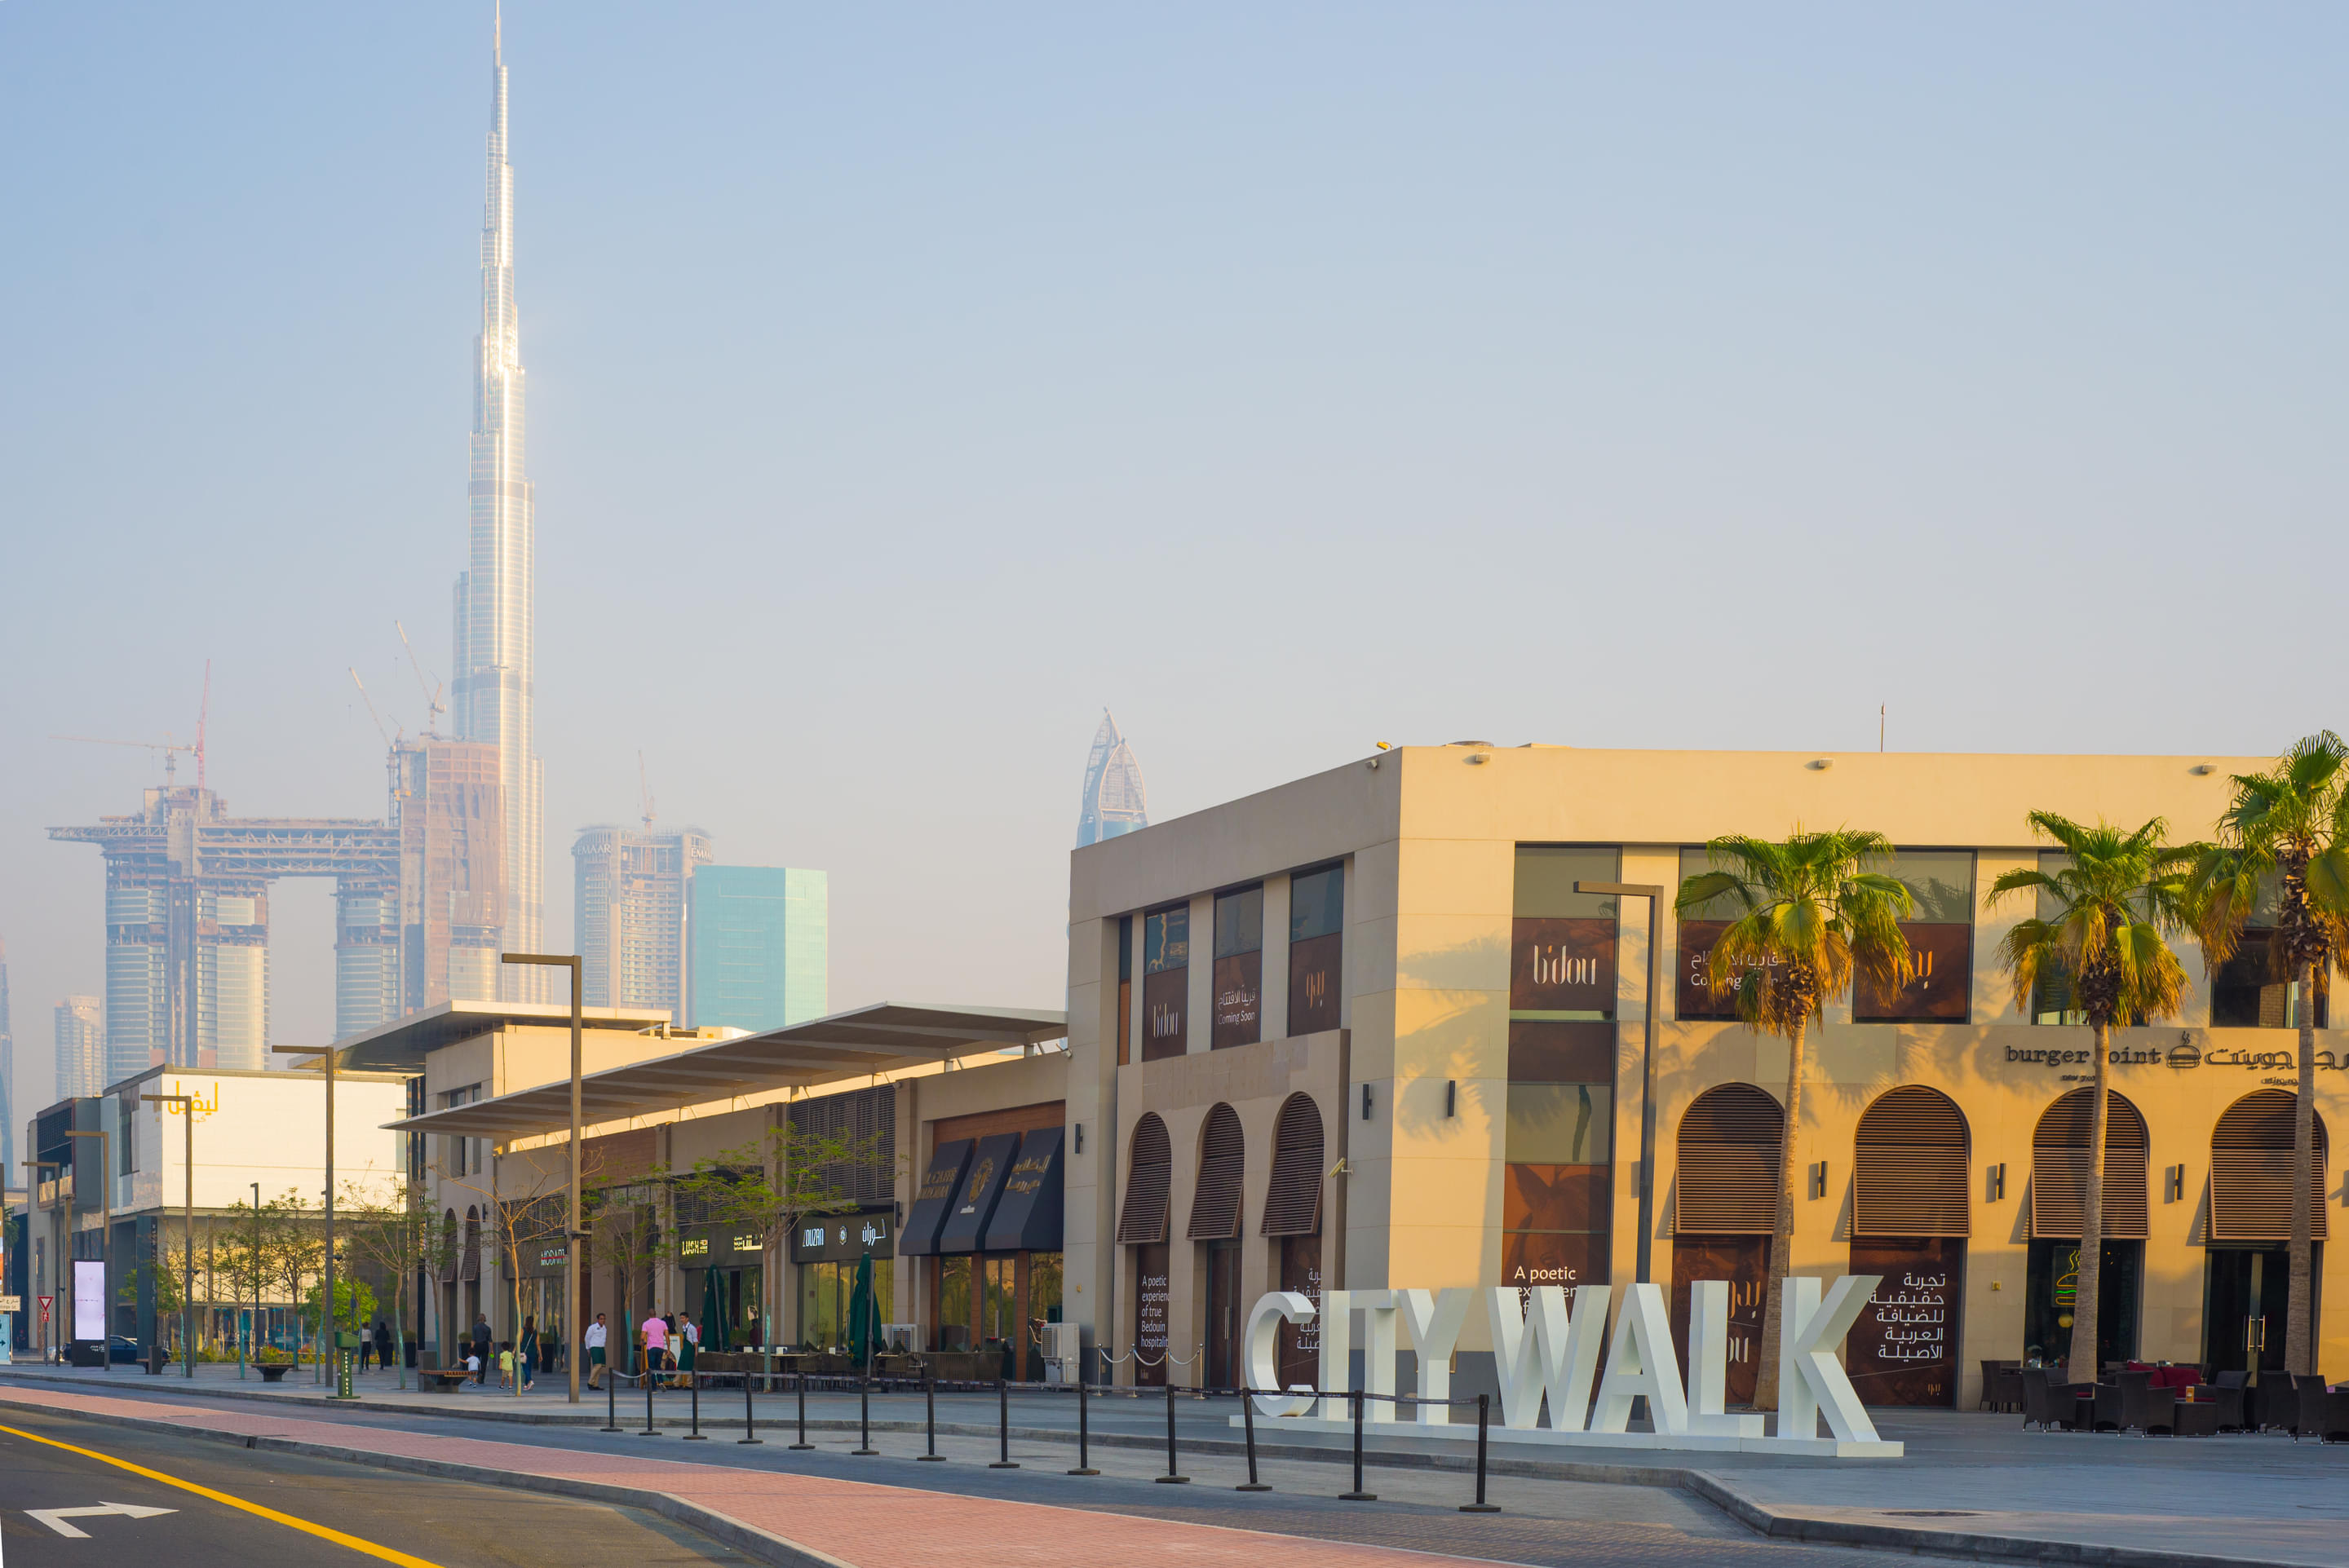 City Walk Dubai Overview